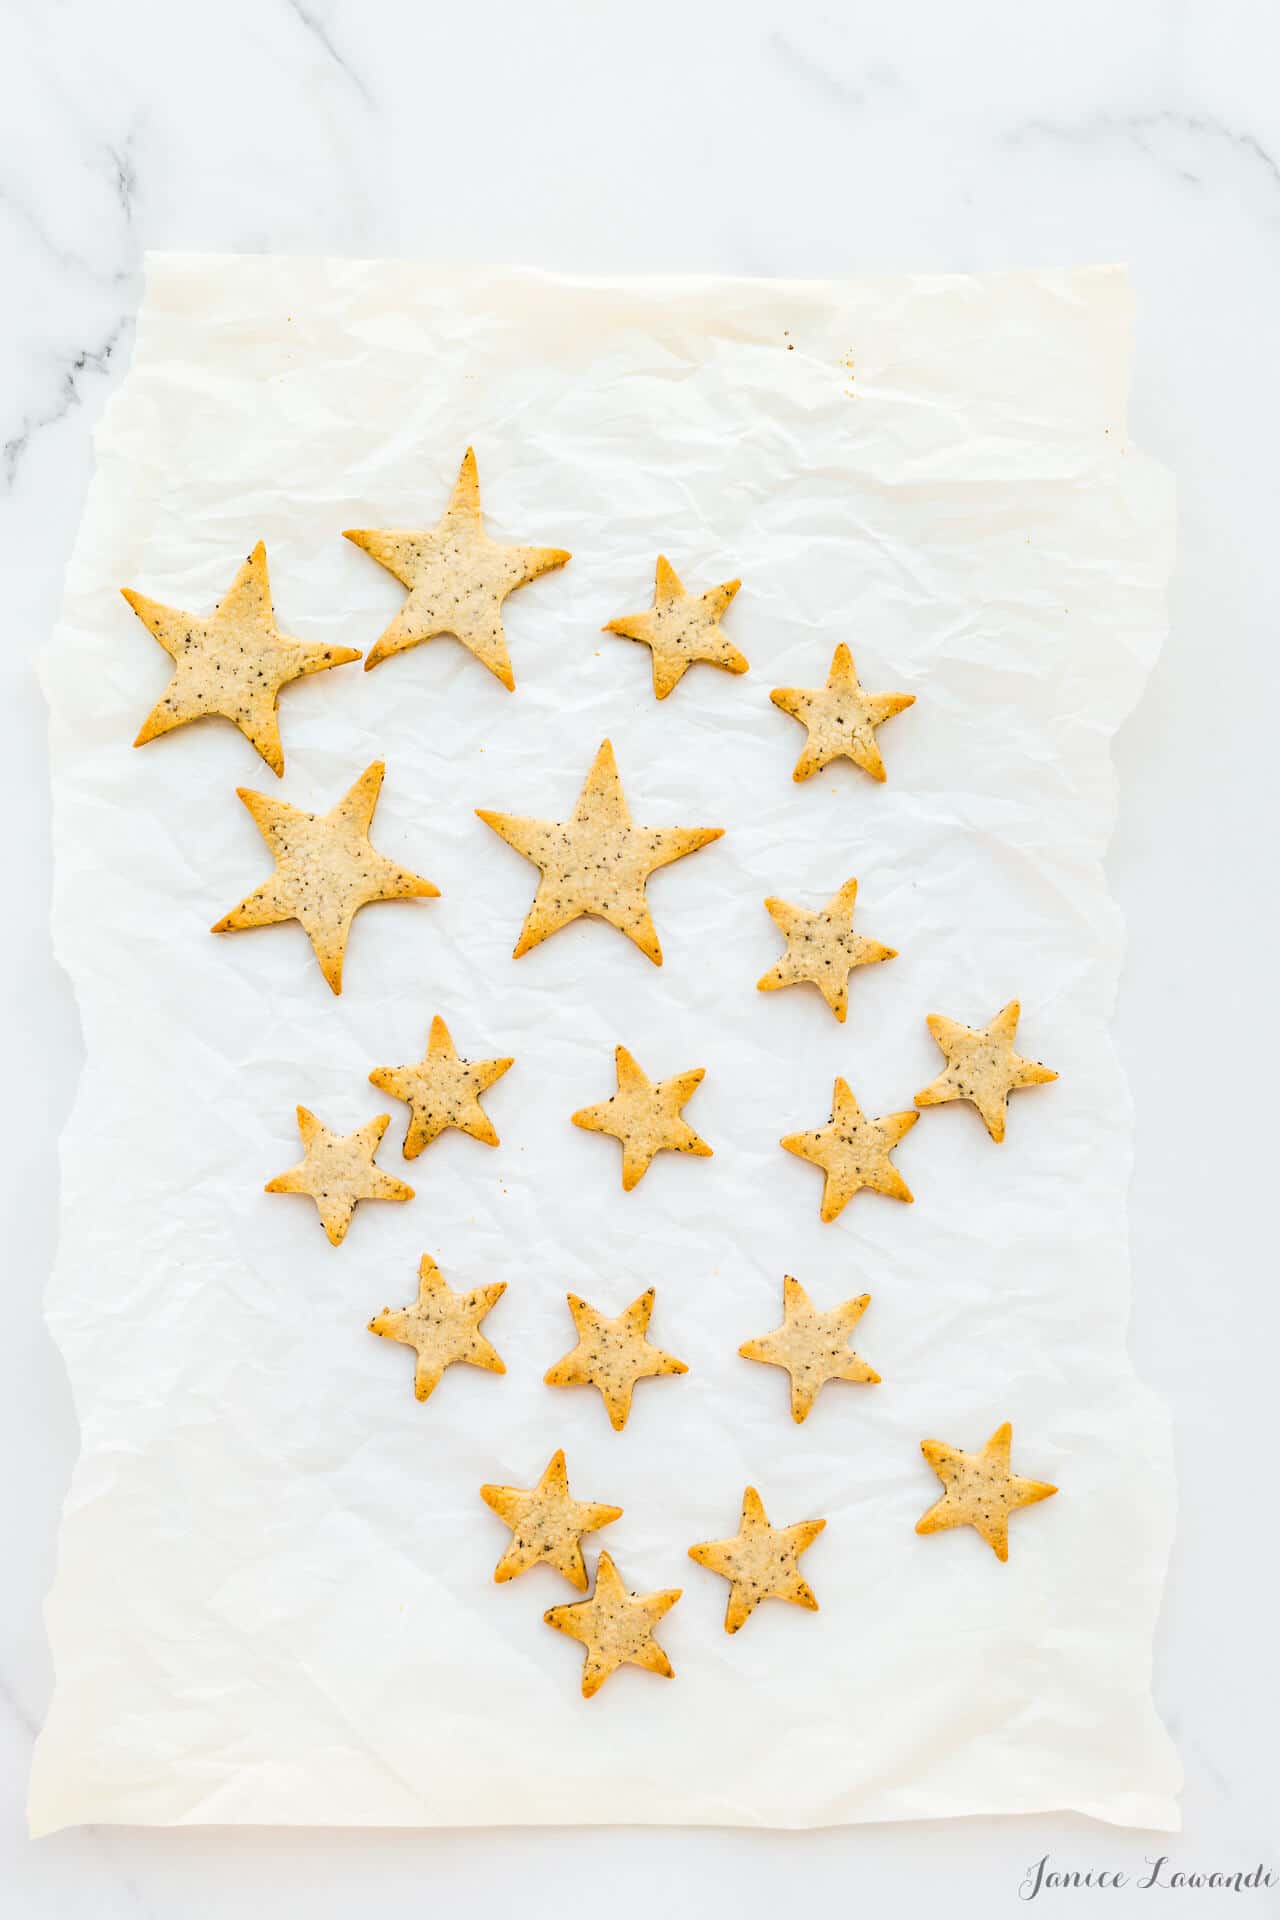 Star shaped cookie cutouts made using tart dough scraps